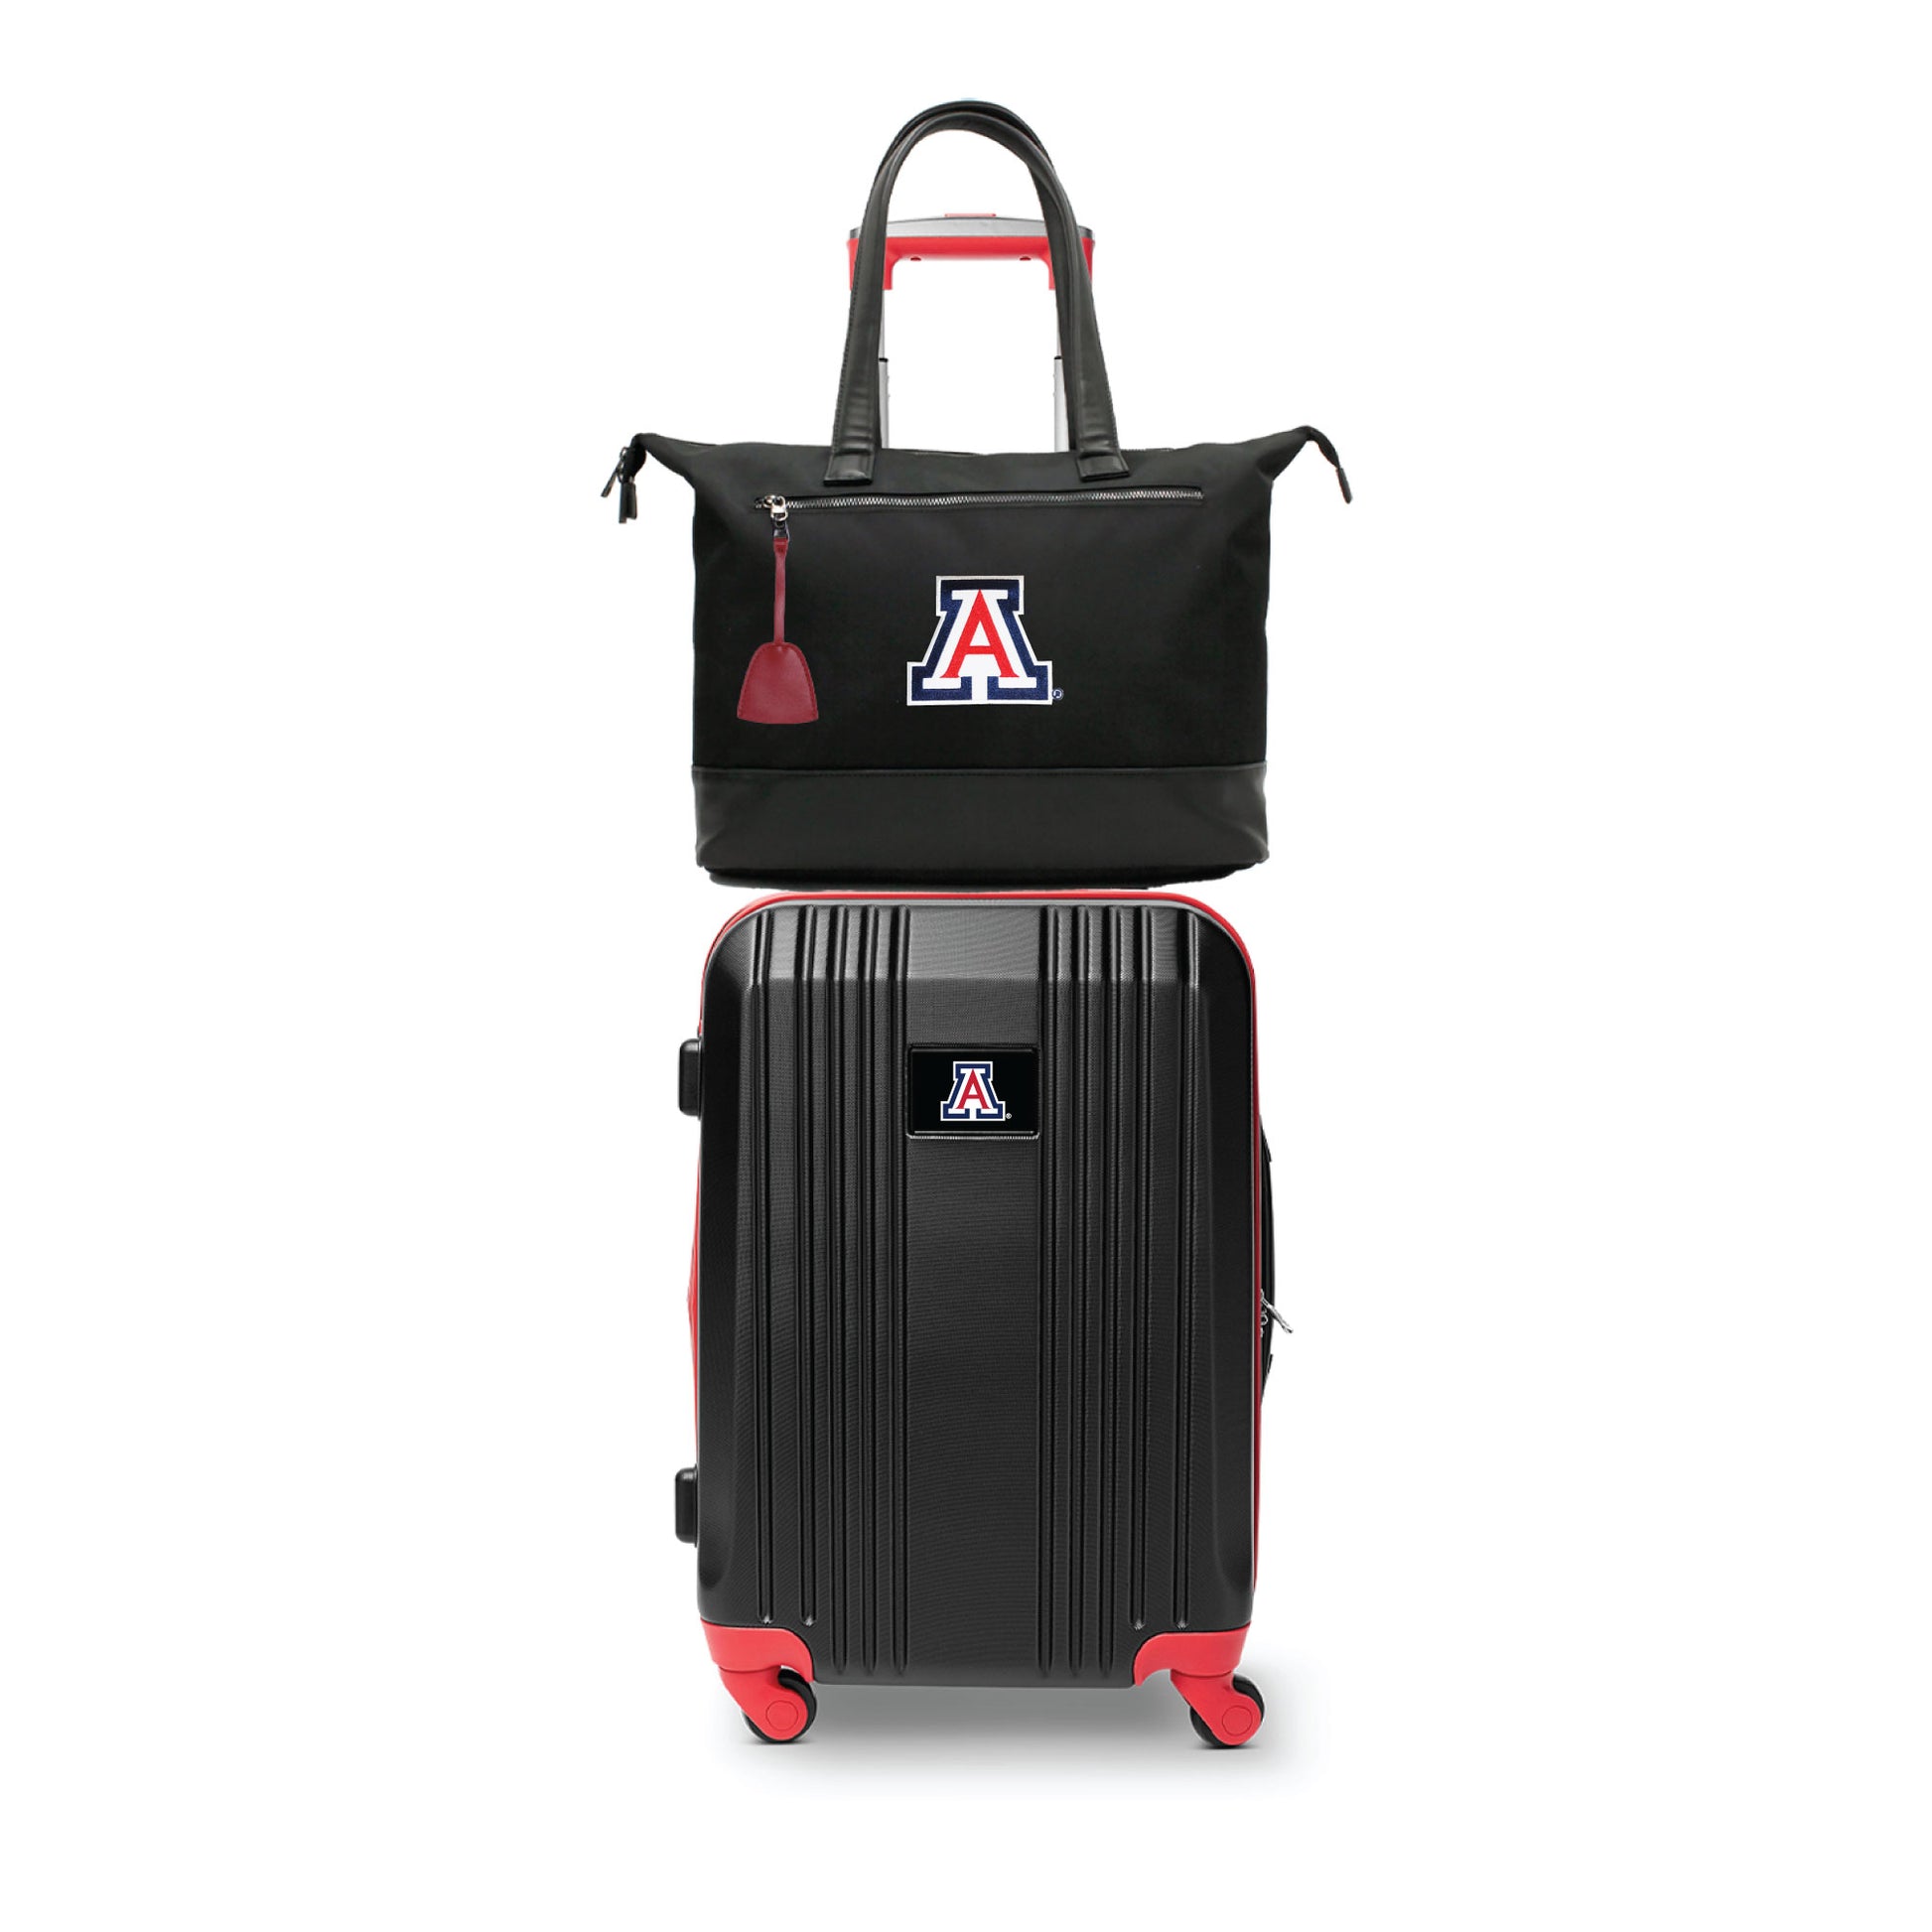 Arizona Wildcats Premium Laptop Tote Bag and Luggage Set